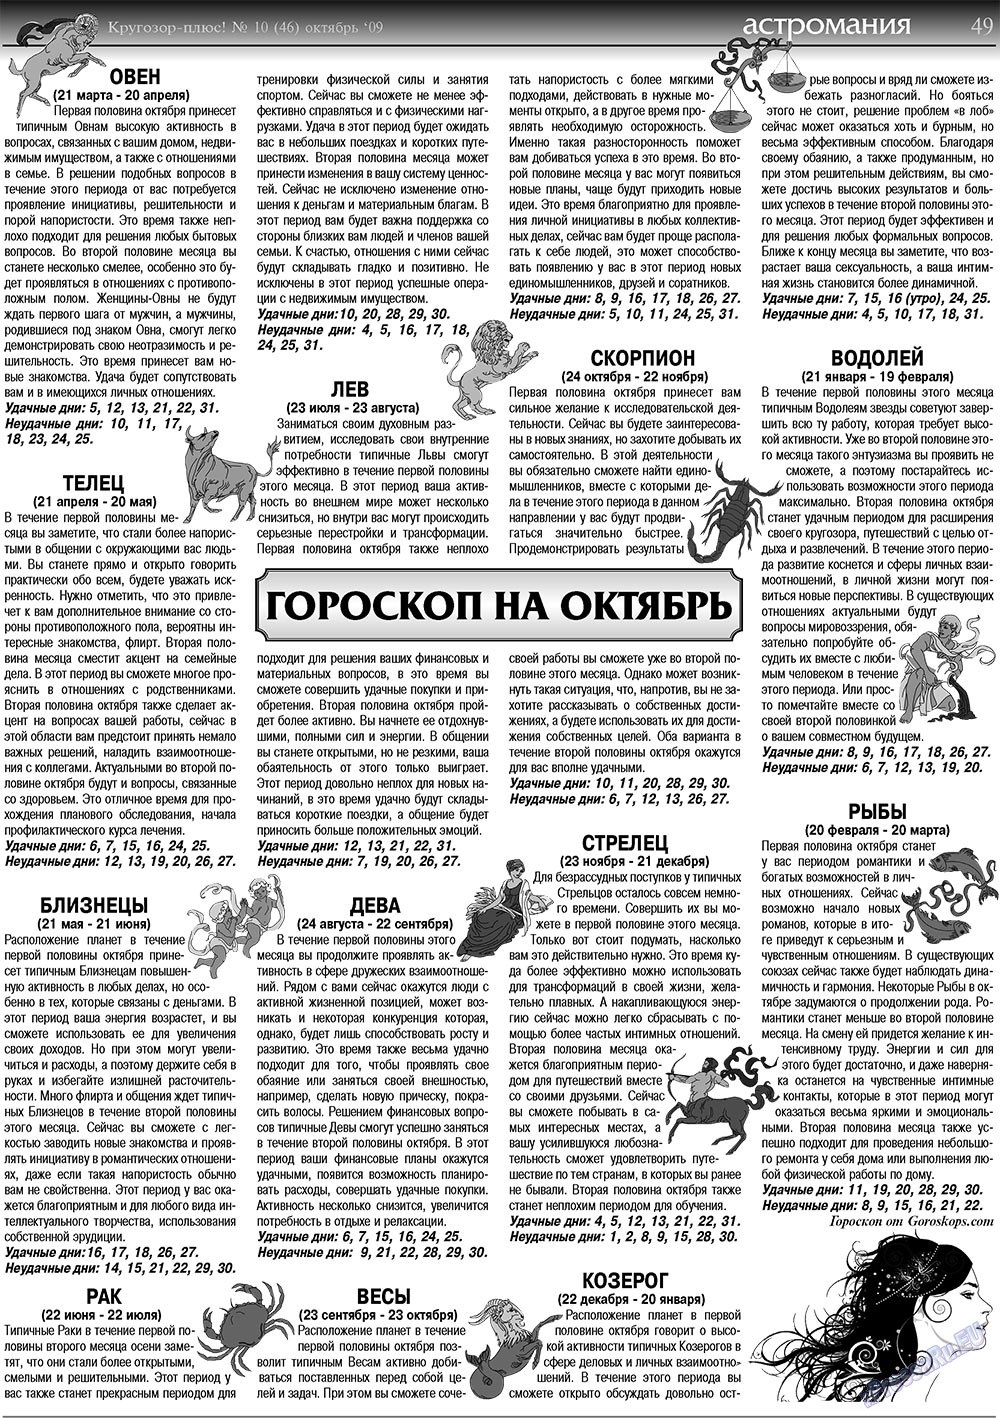 Кругозор плюс! (газета). 2009 год, номер 10, стр. 49